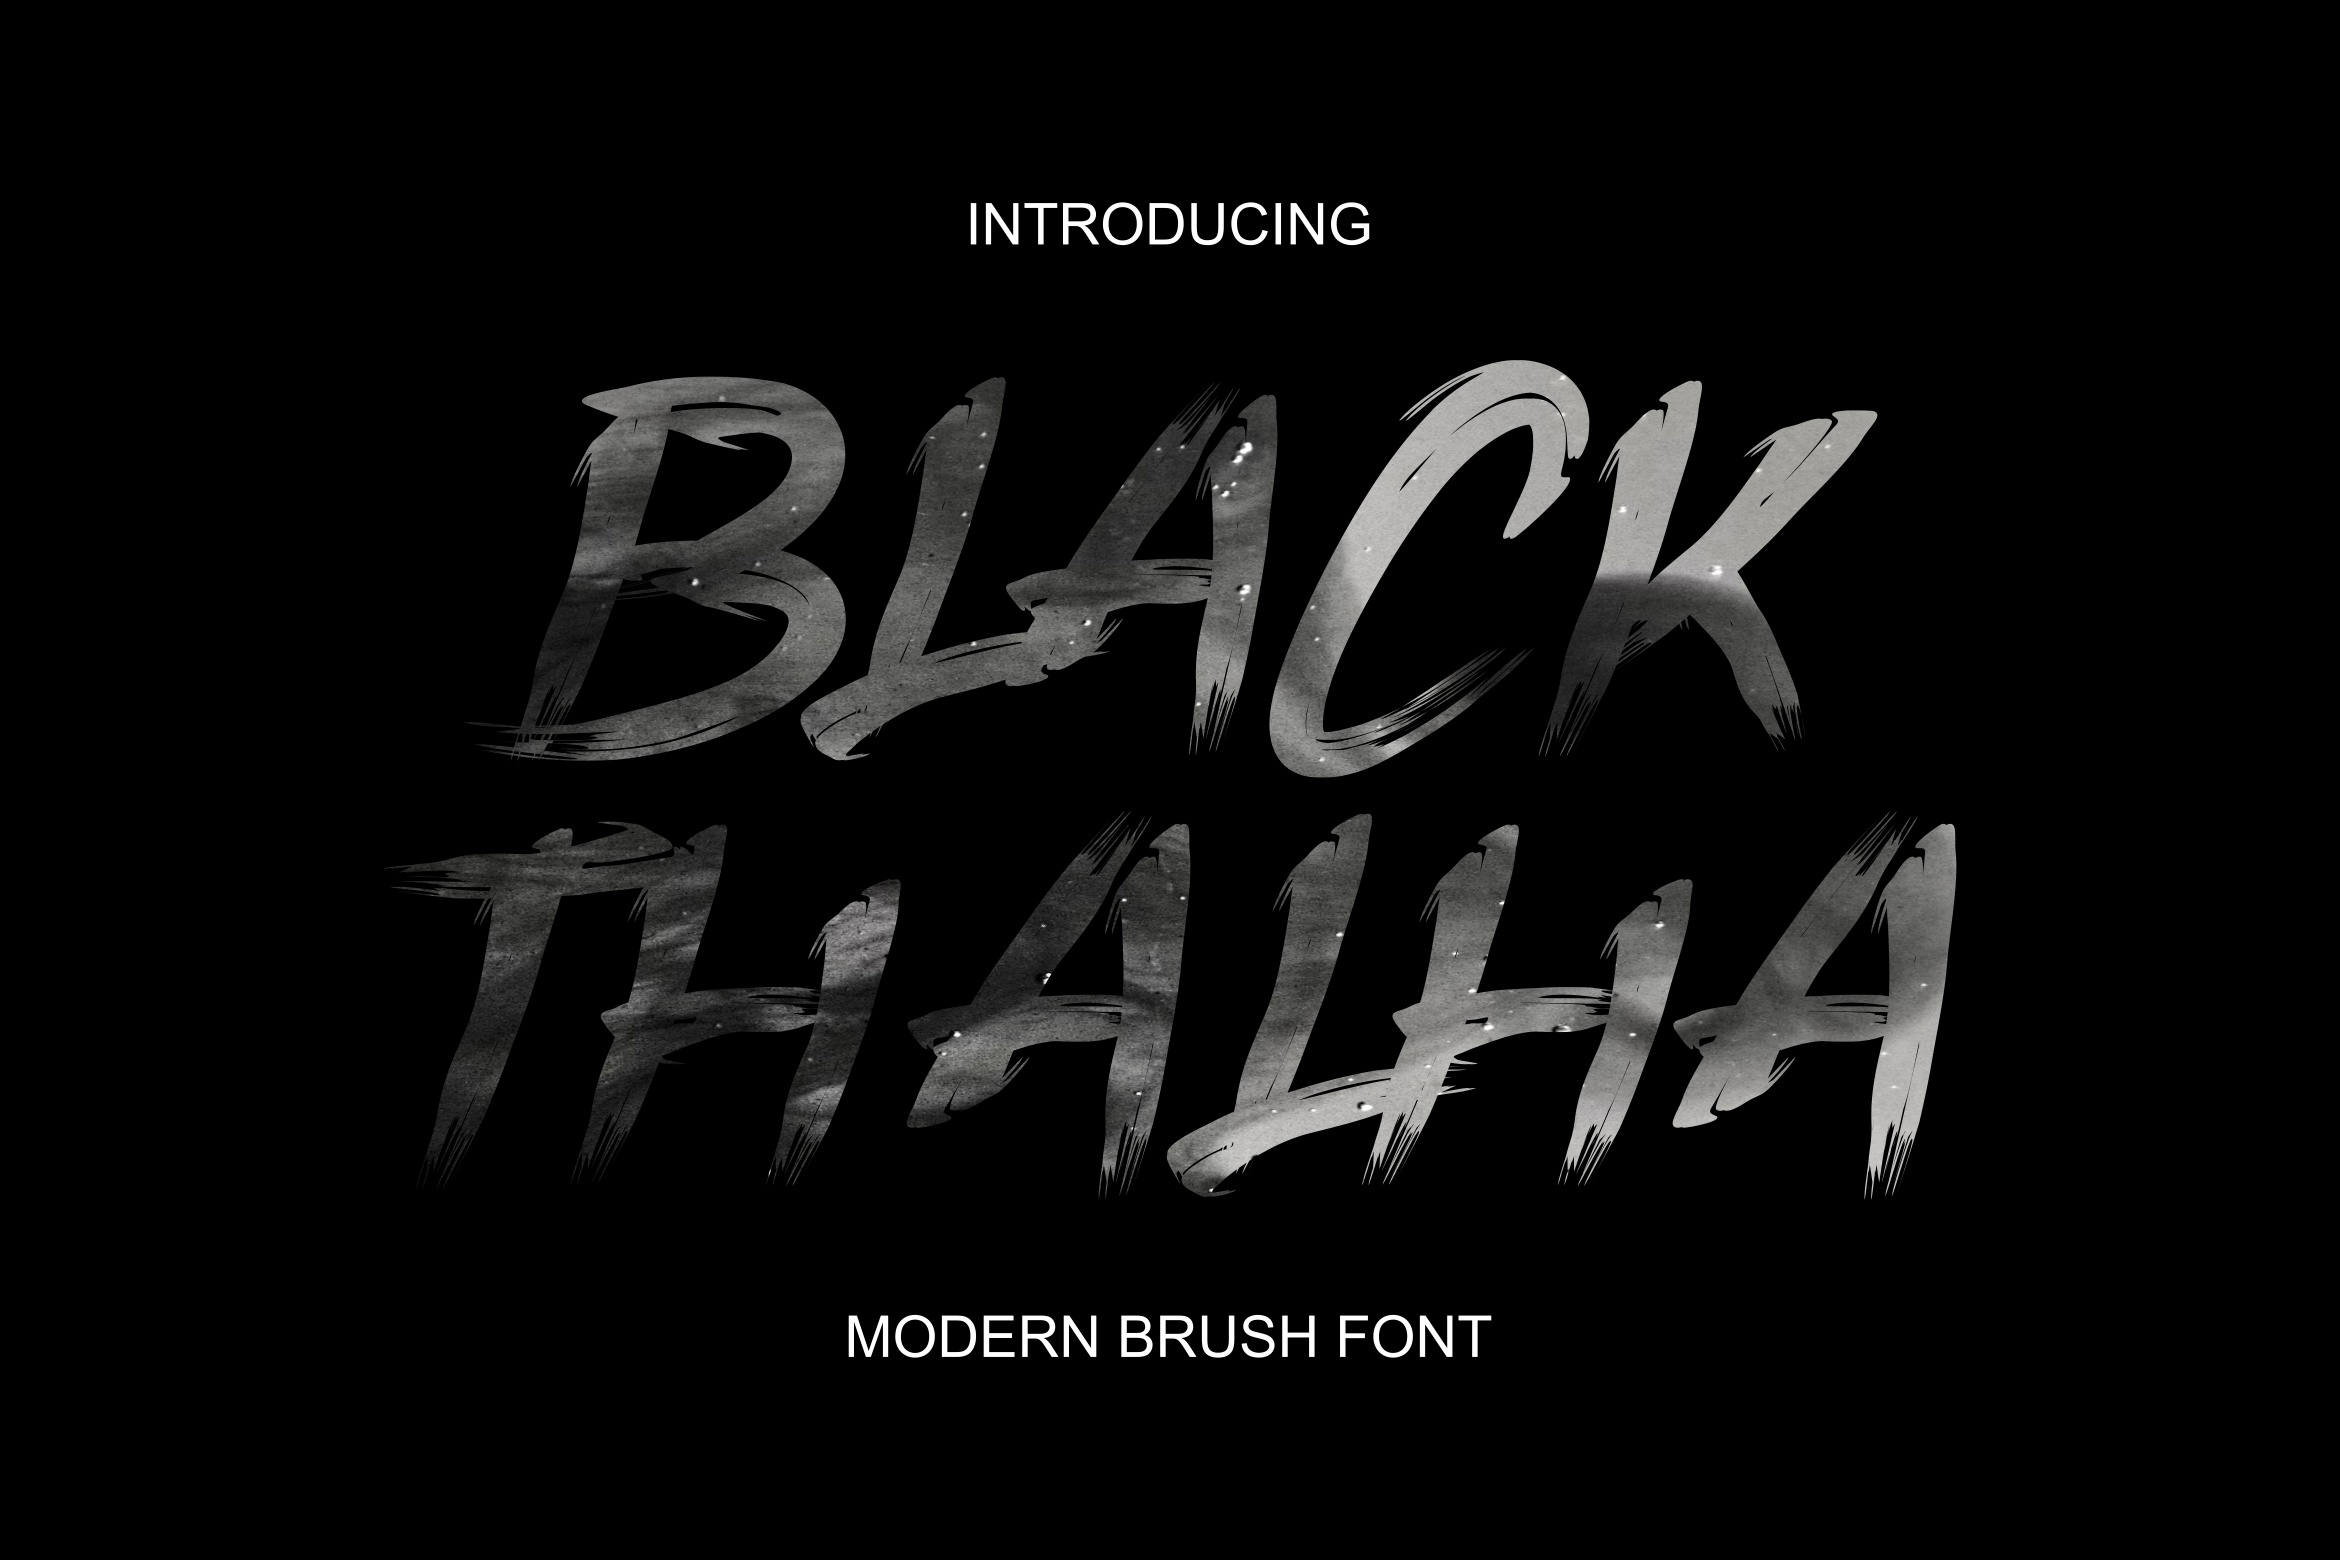 Пример шрифта Black Thalha Regular